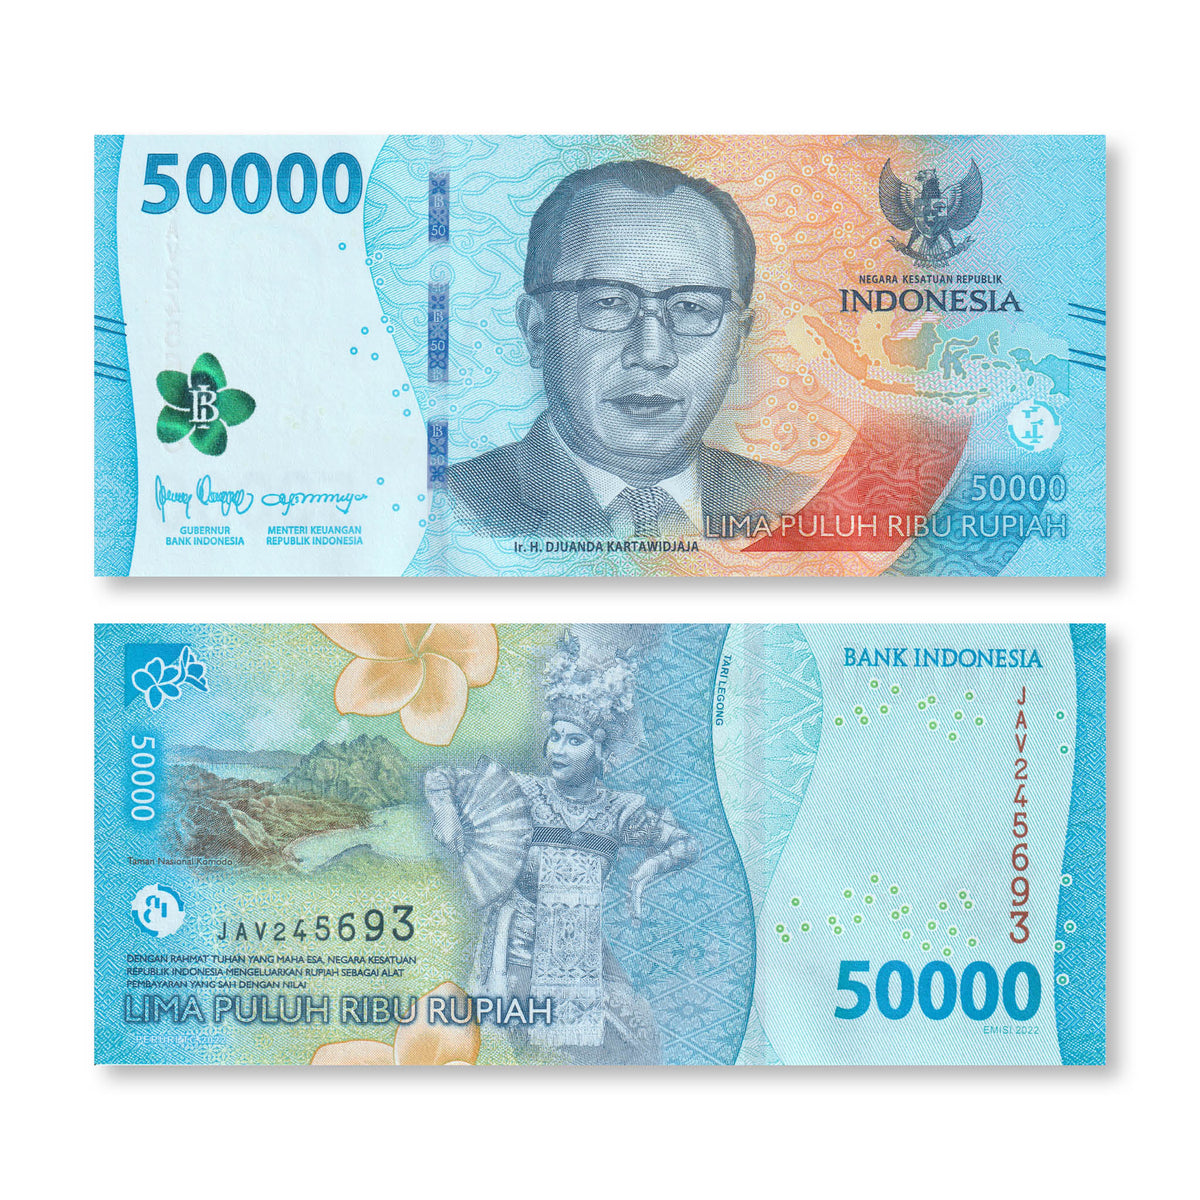 Indonesia 50000 Rupiah, 2022, B622a, UNC - Robert's World Money - World Banknotes